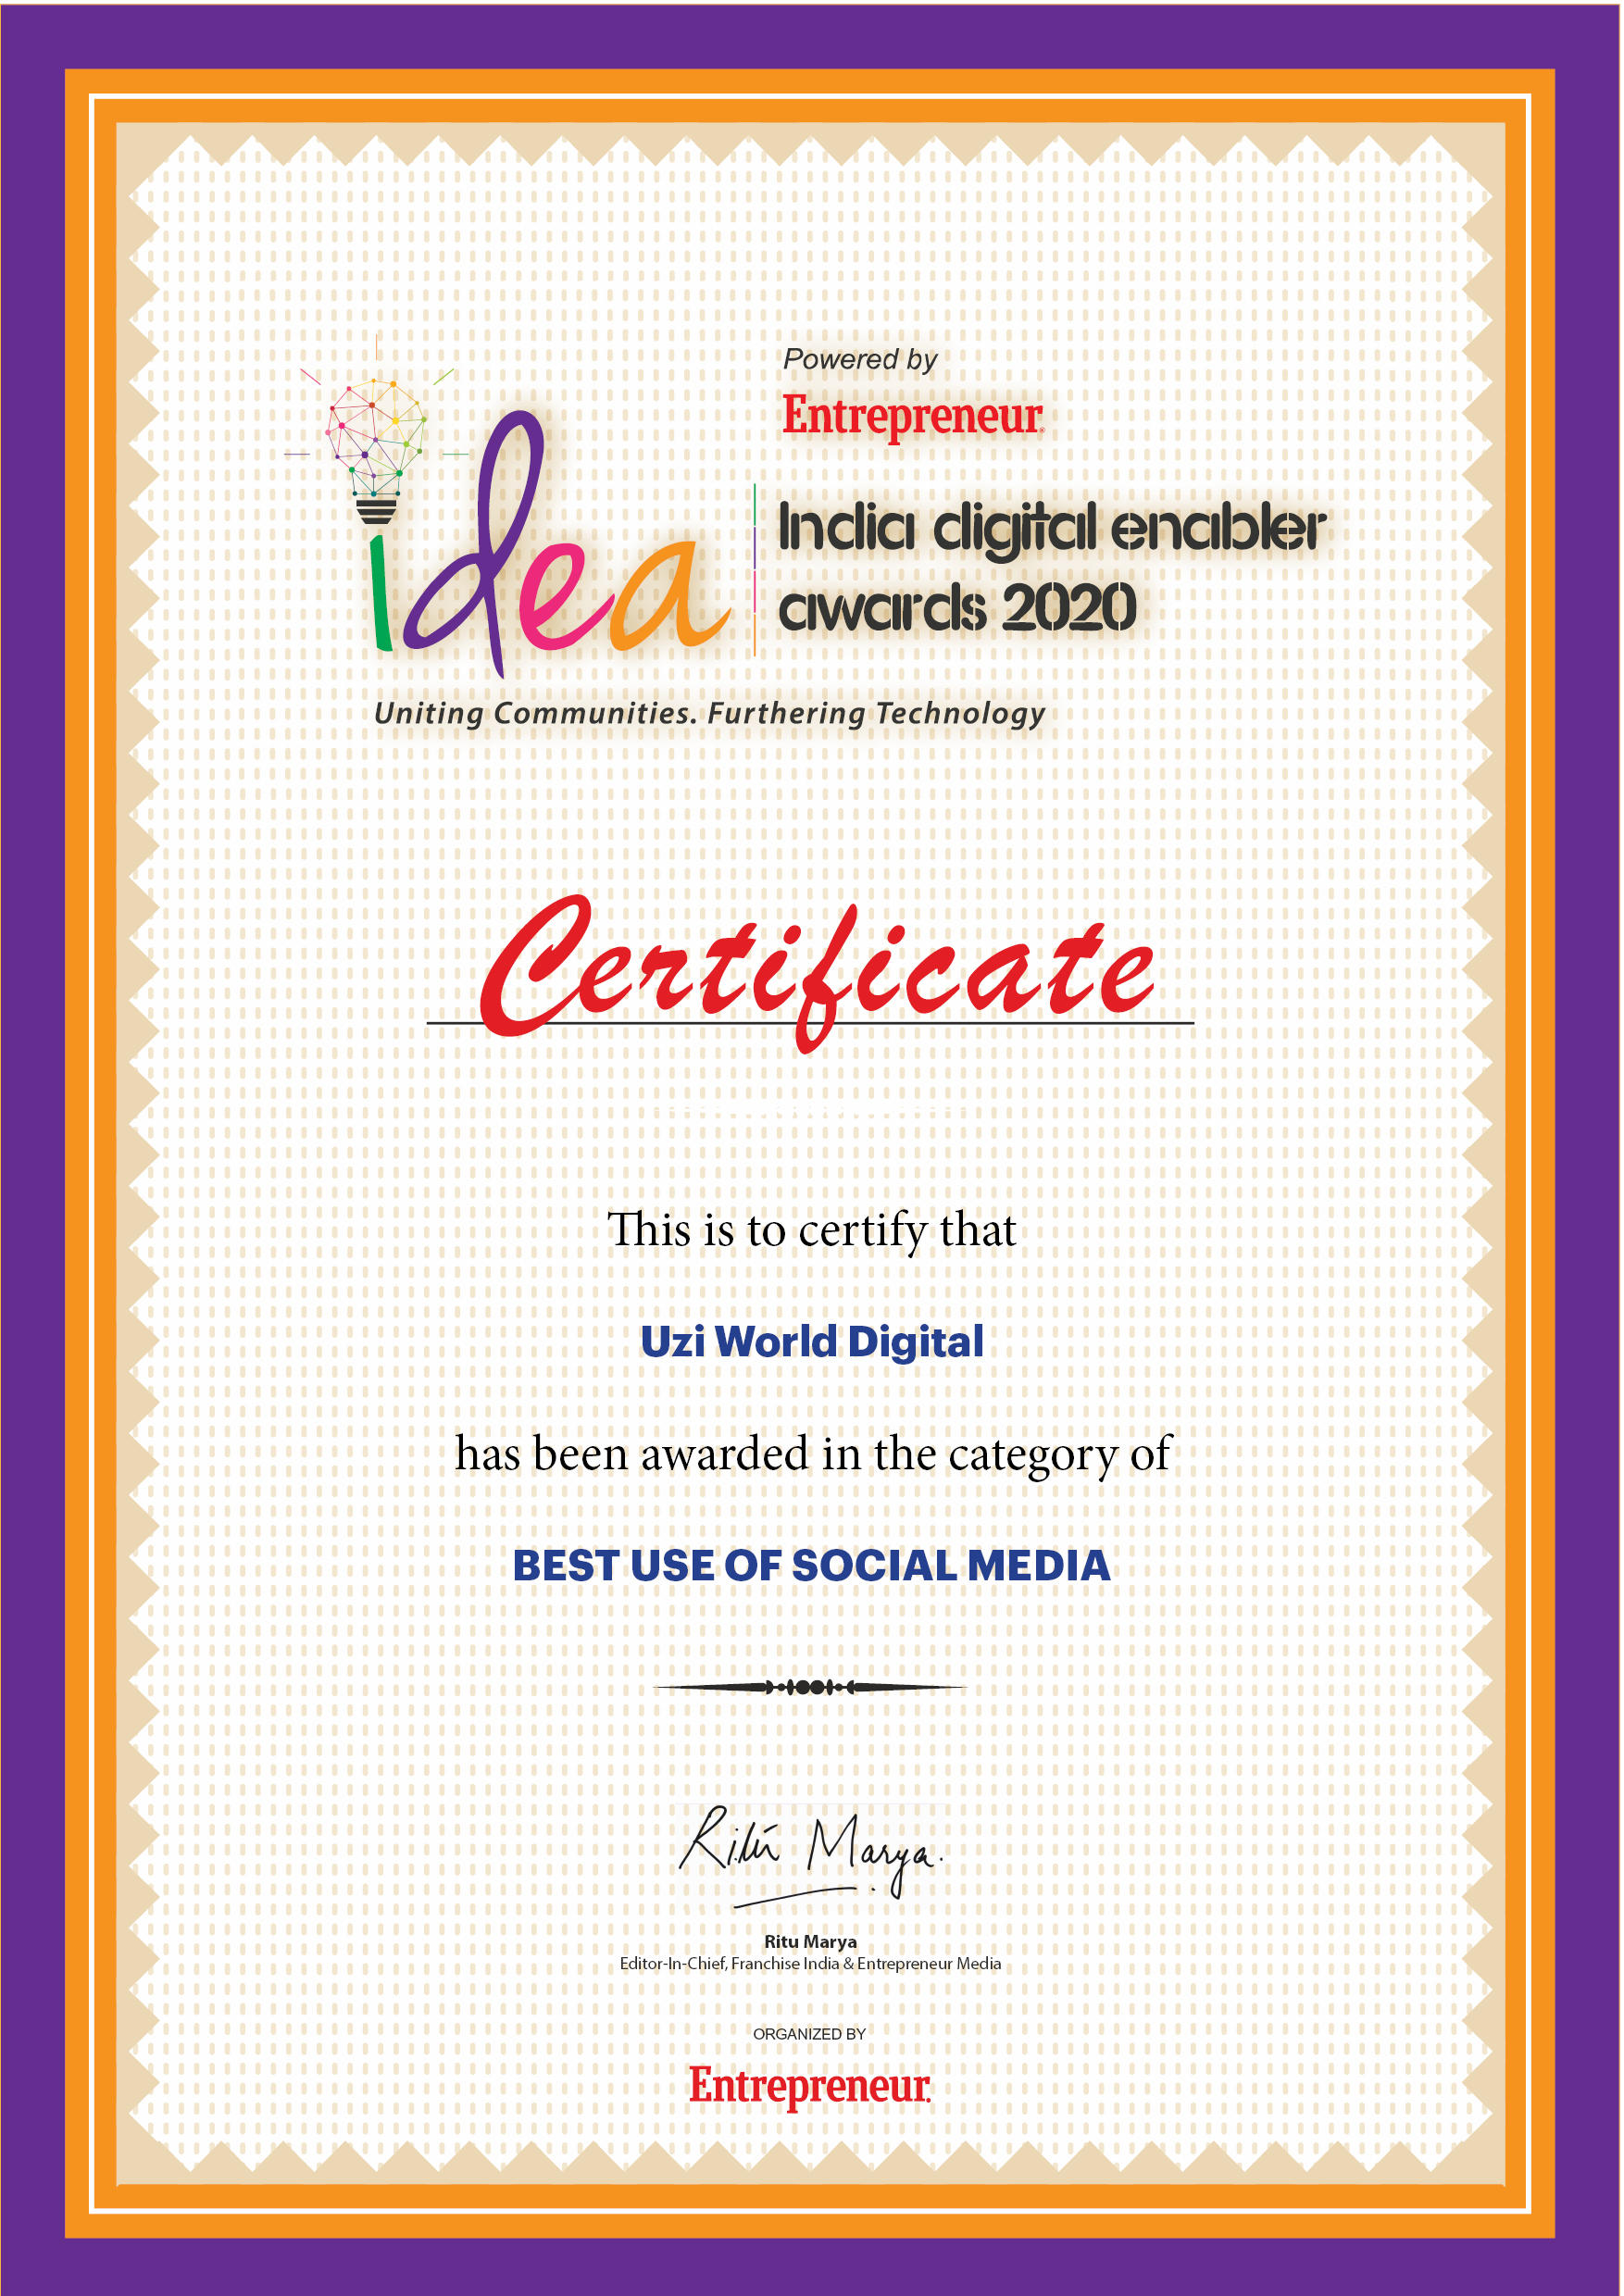 India Digital Enabler awards winner